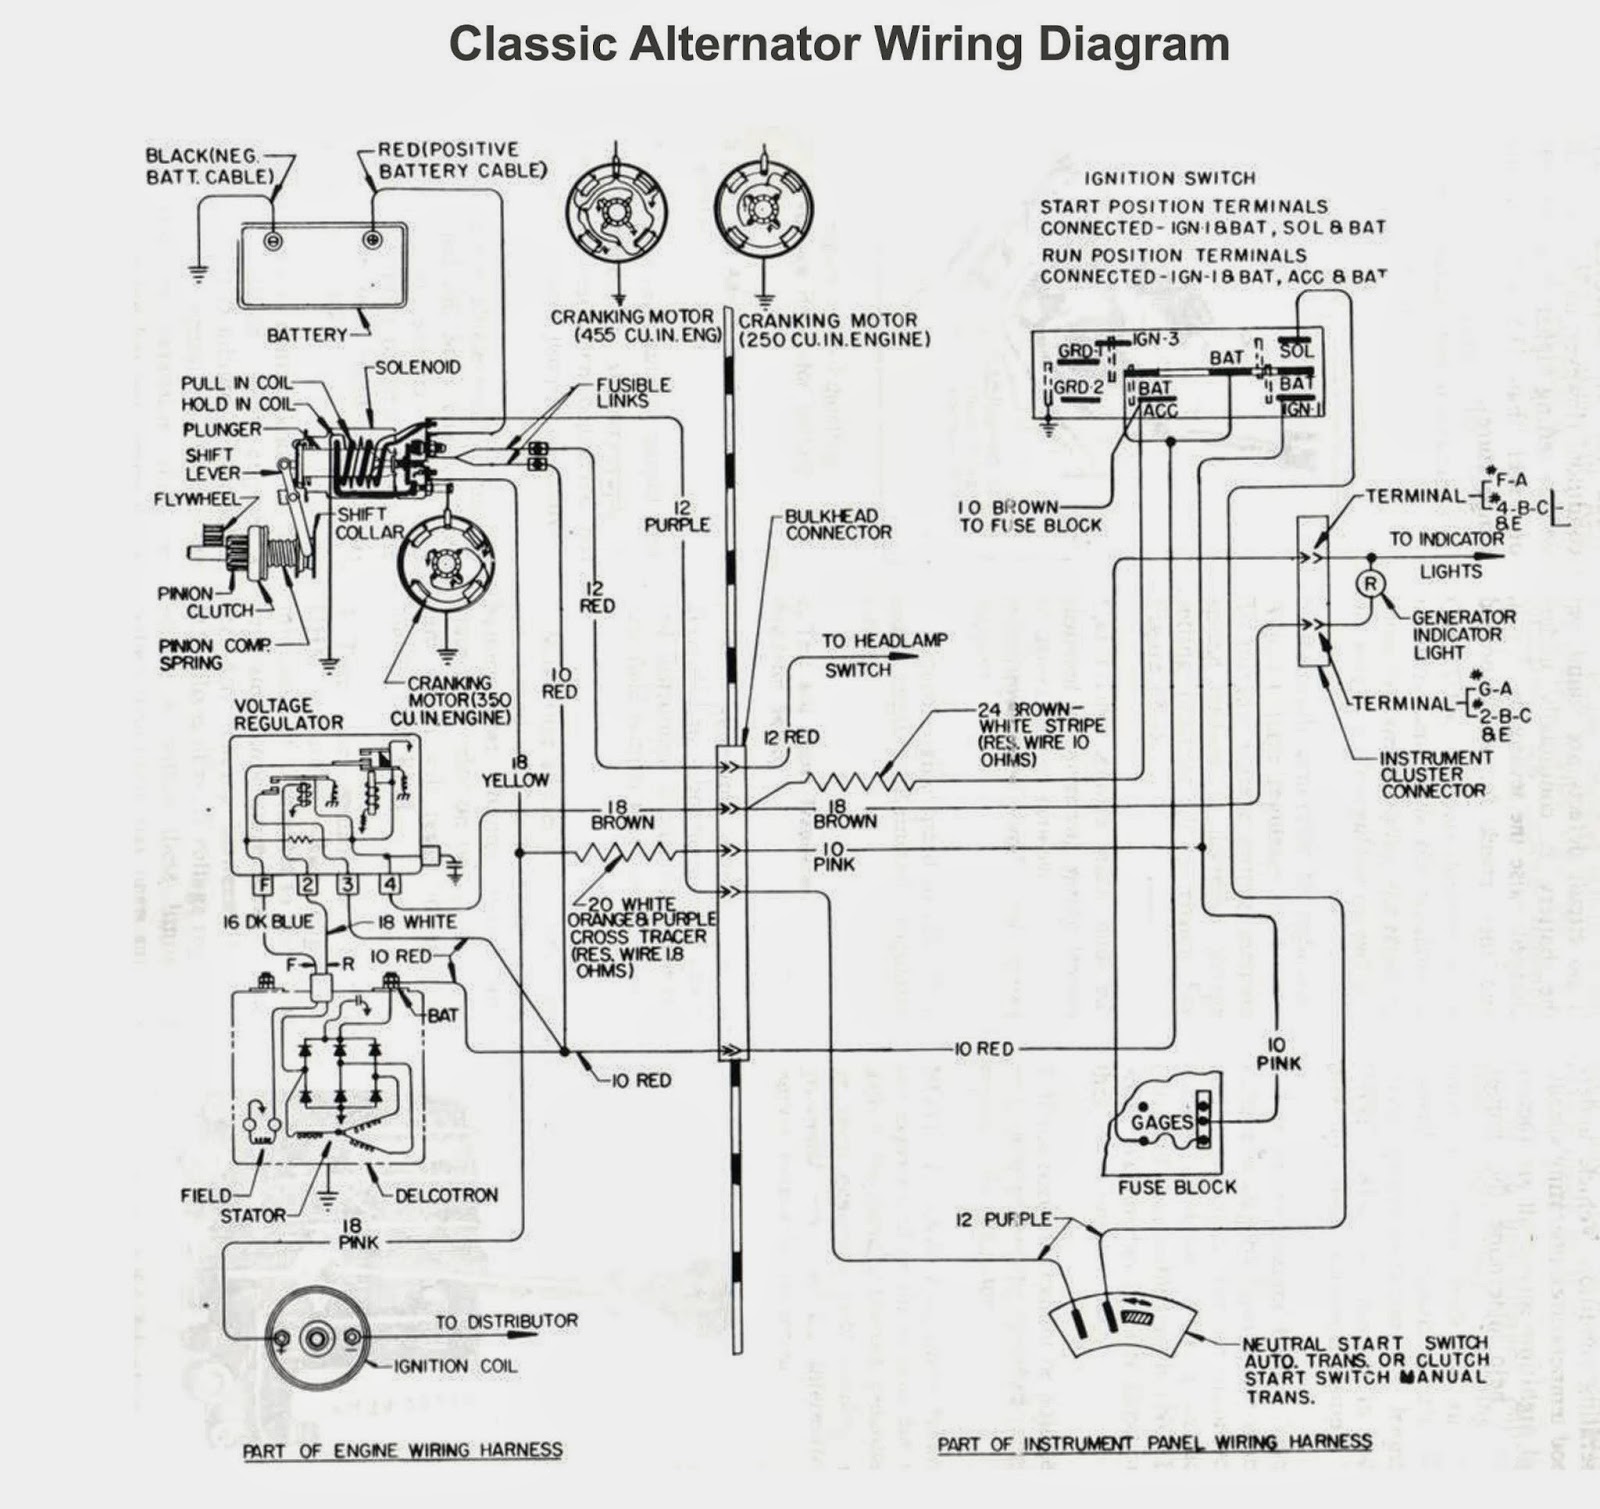 emc 2390 power supply wiring diagram